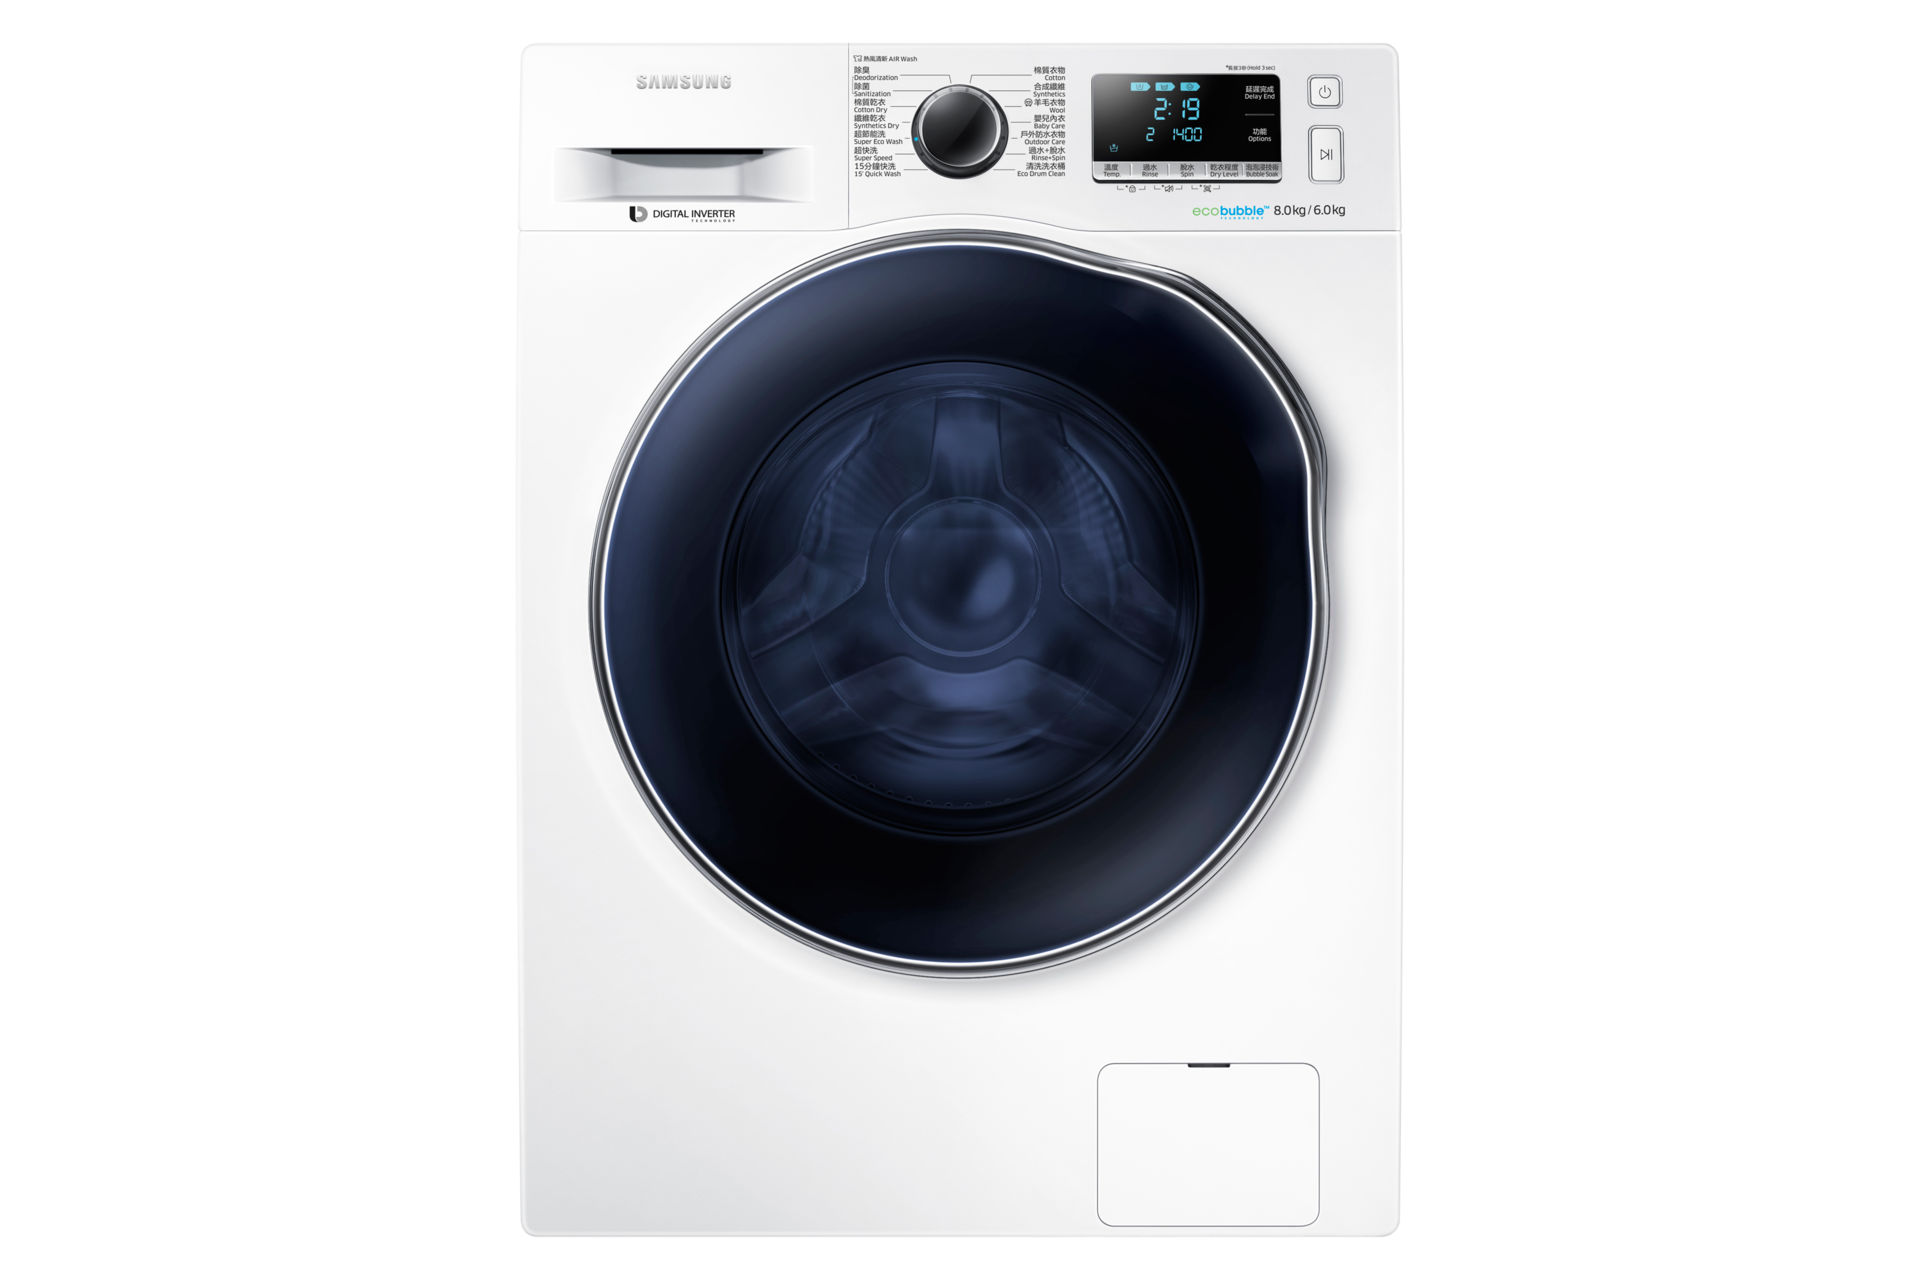 air max 90 washing machine